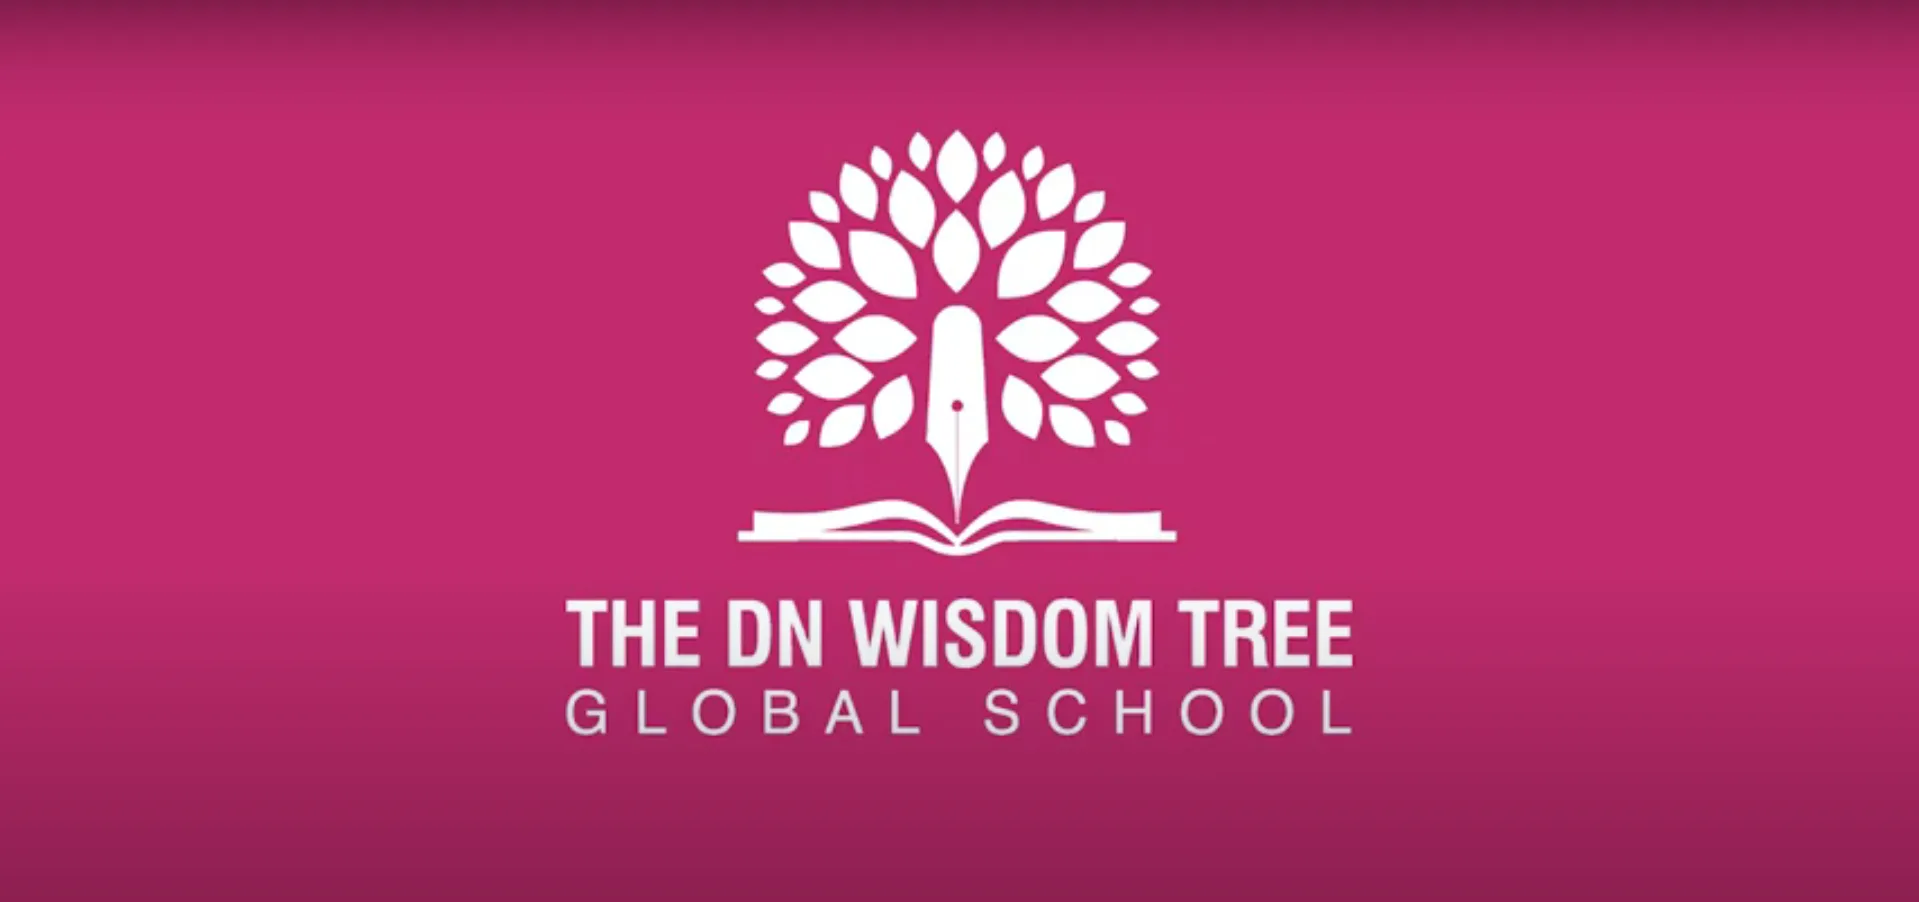 The DN Wisdom Tree Global School – International Women’s Day 2021